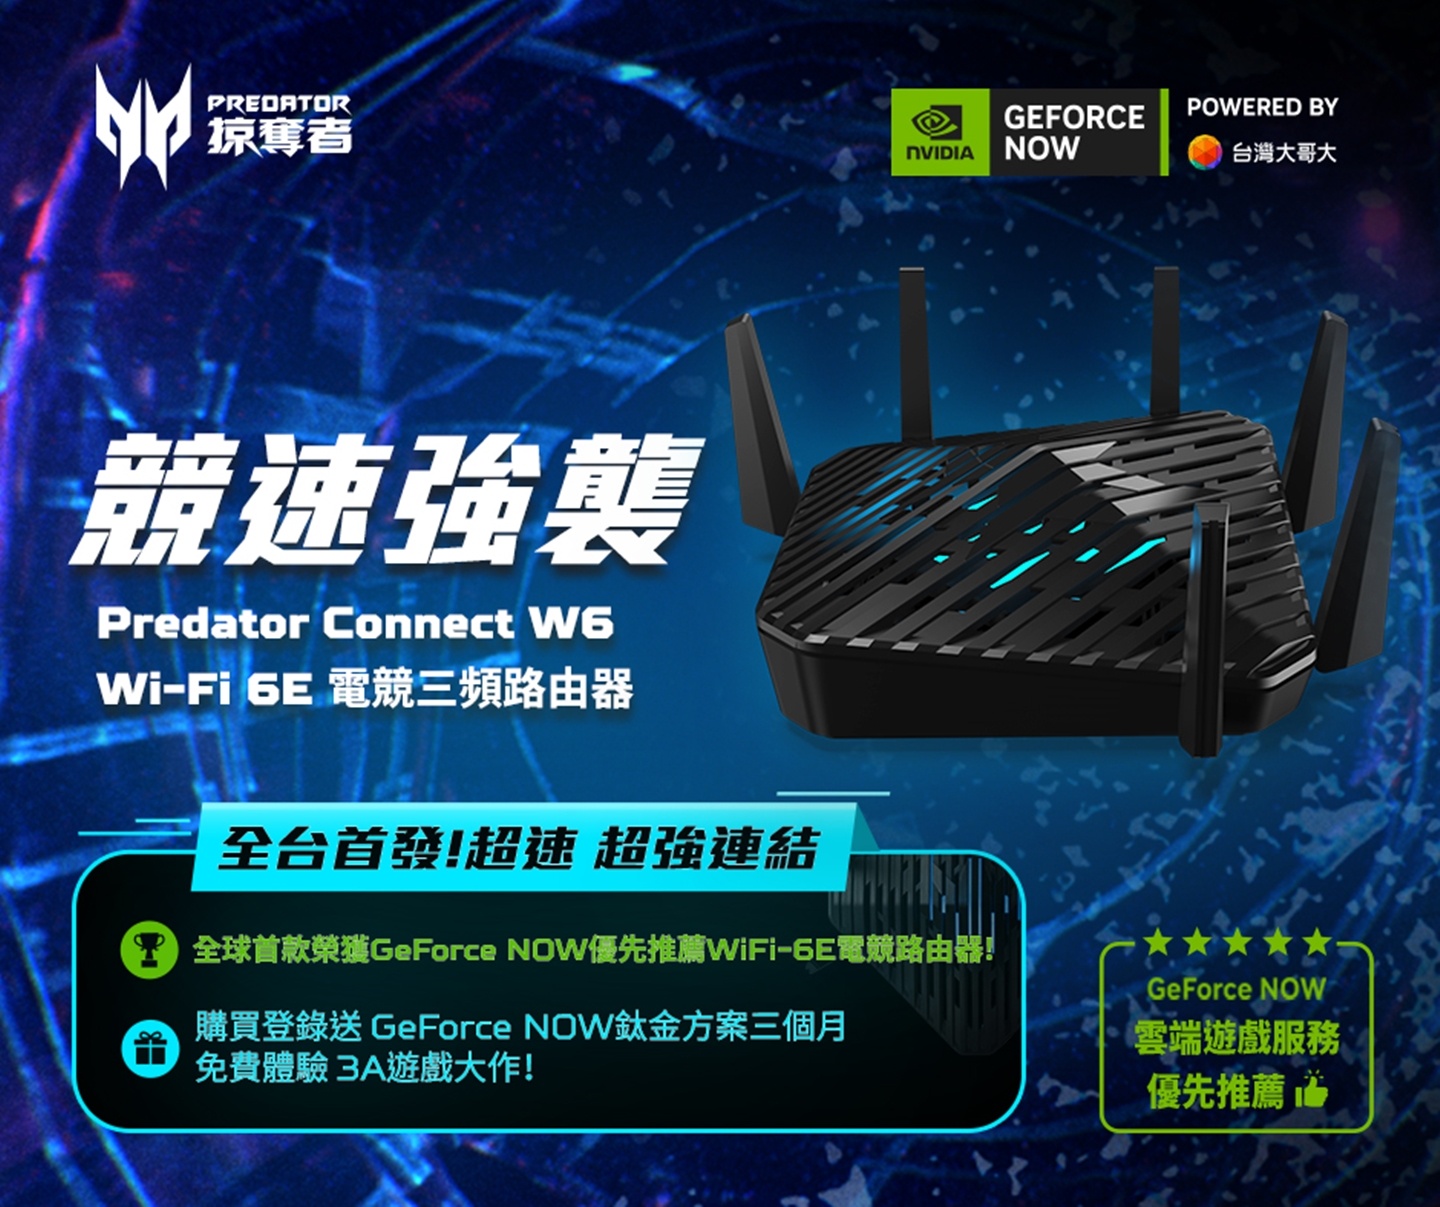 Predator Connect W6：第一台 NCC 認證的 WiFi-6E 電競路由器開賣！